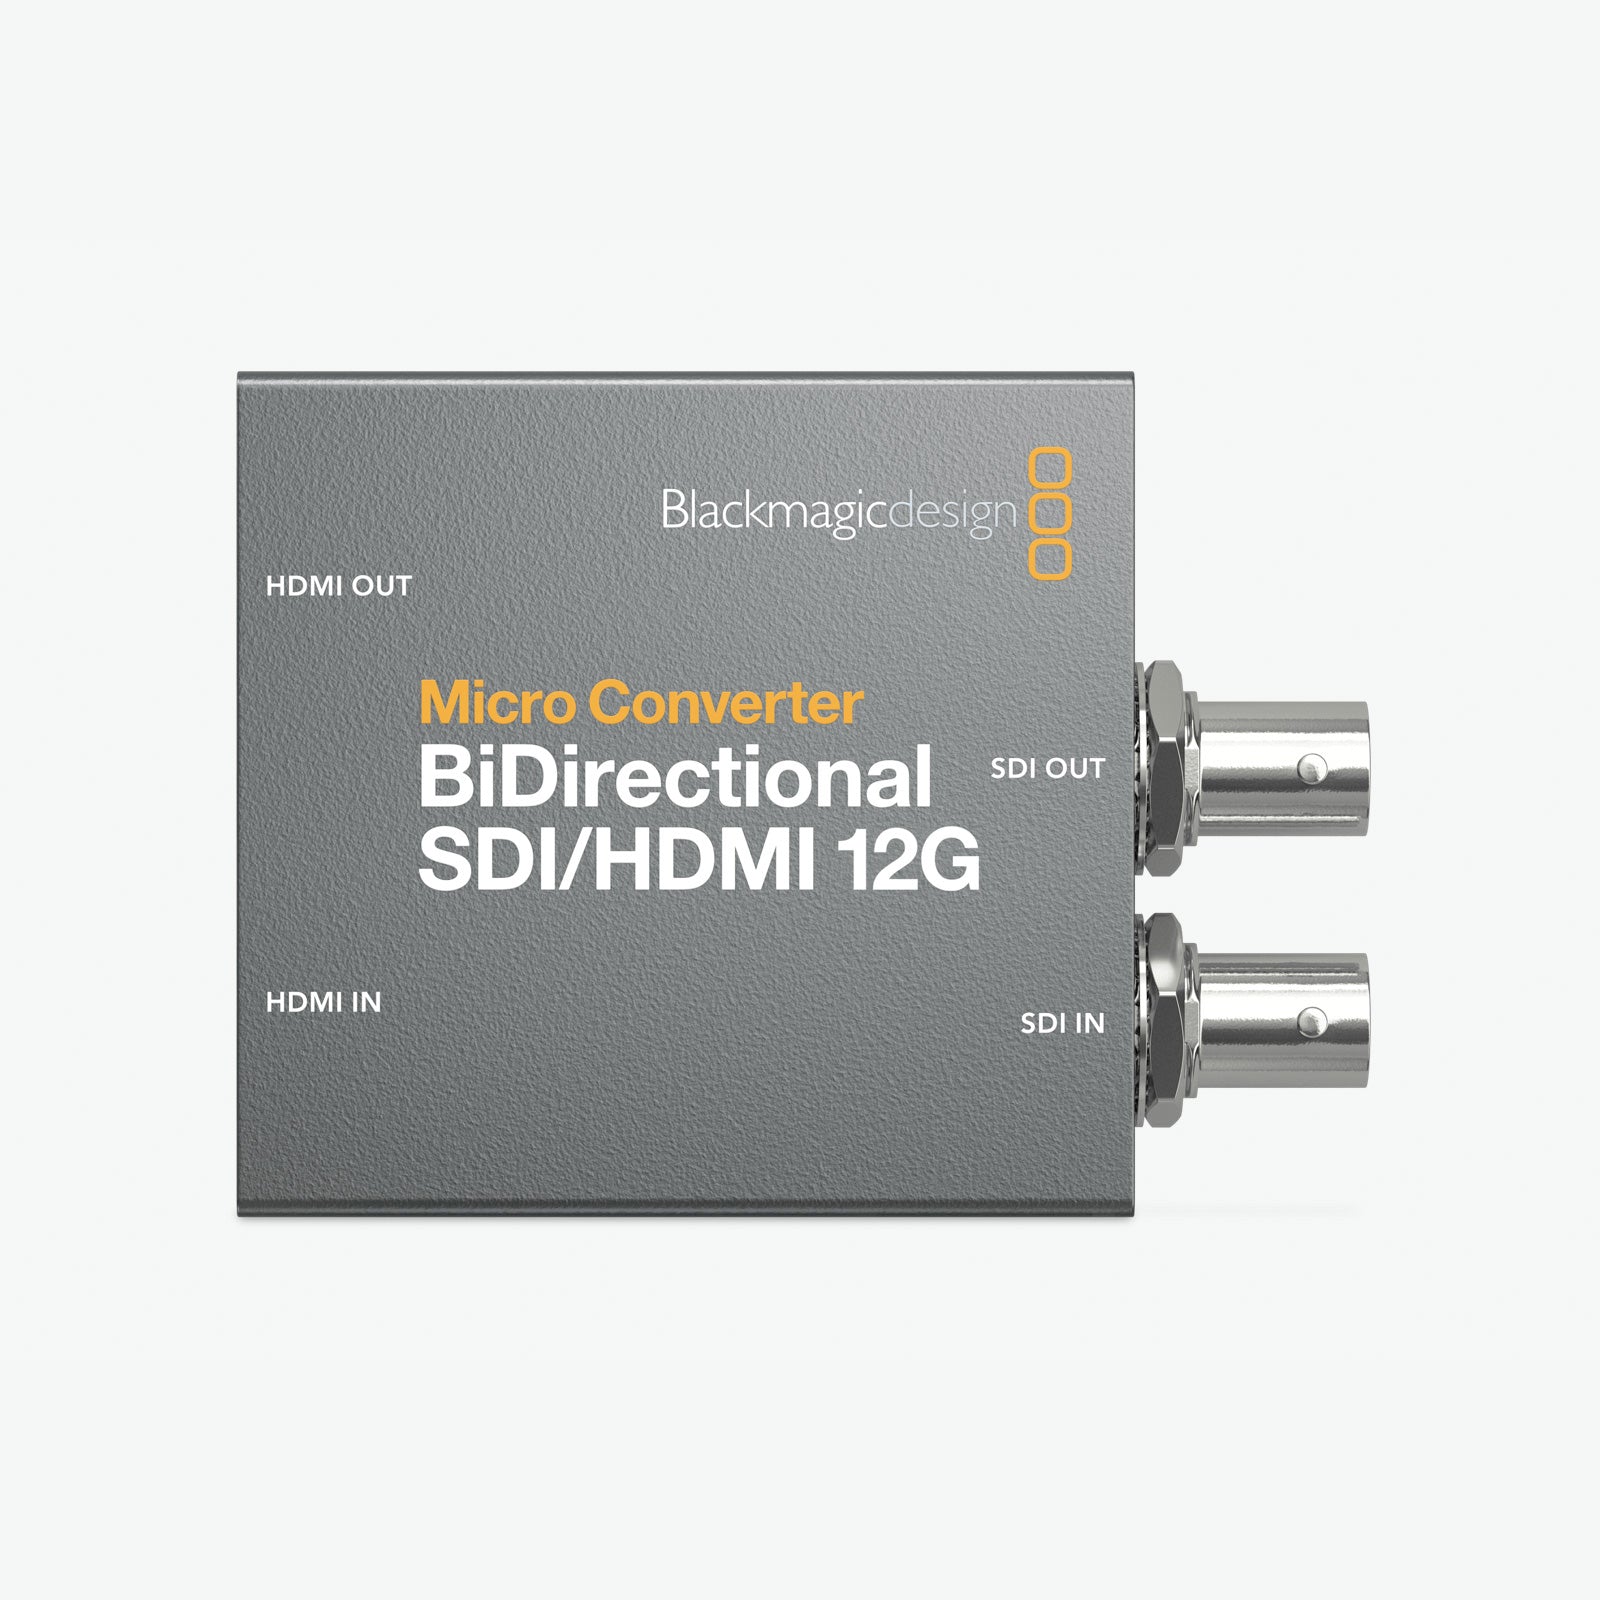 Blackmagic Design(ブラックマジックデザイン) Micro Converter BiDirectional SDI/HDMI 12G CONVBDC/SDI/HDMI12G